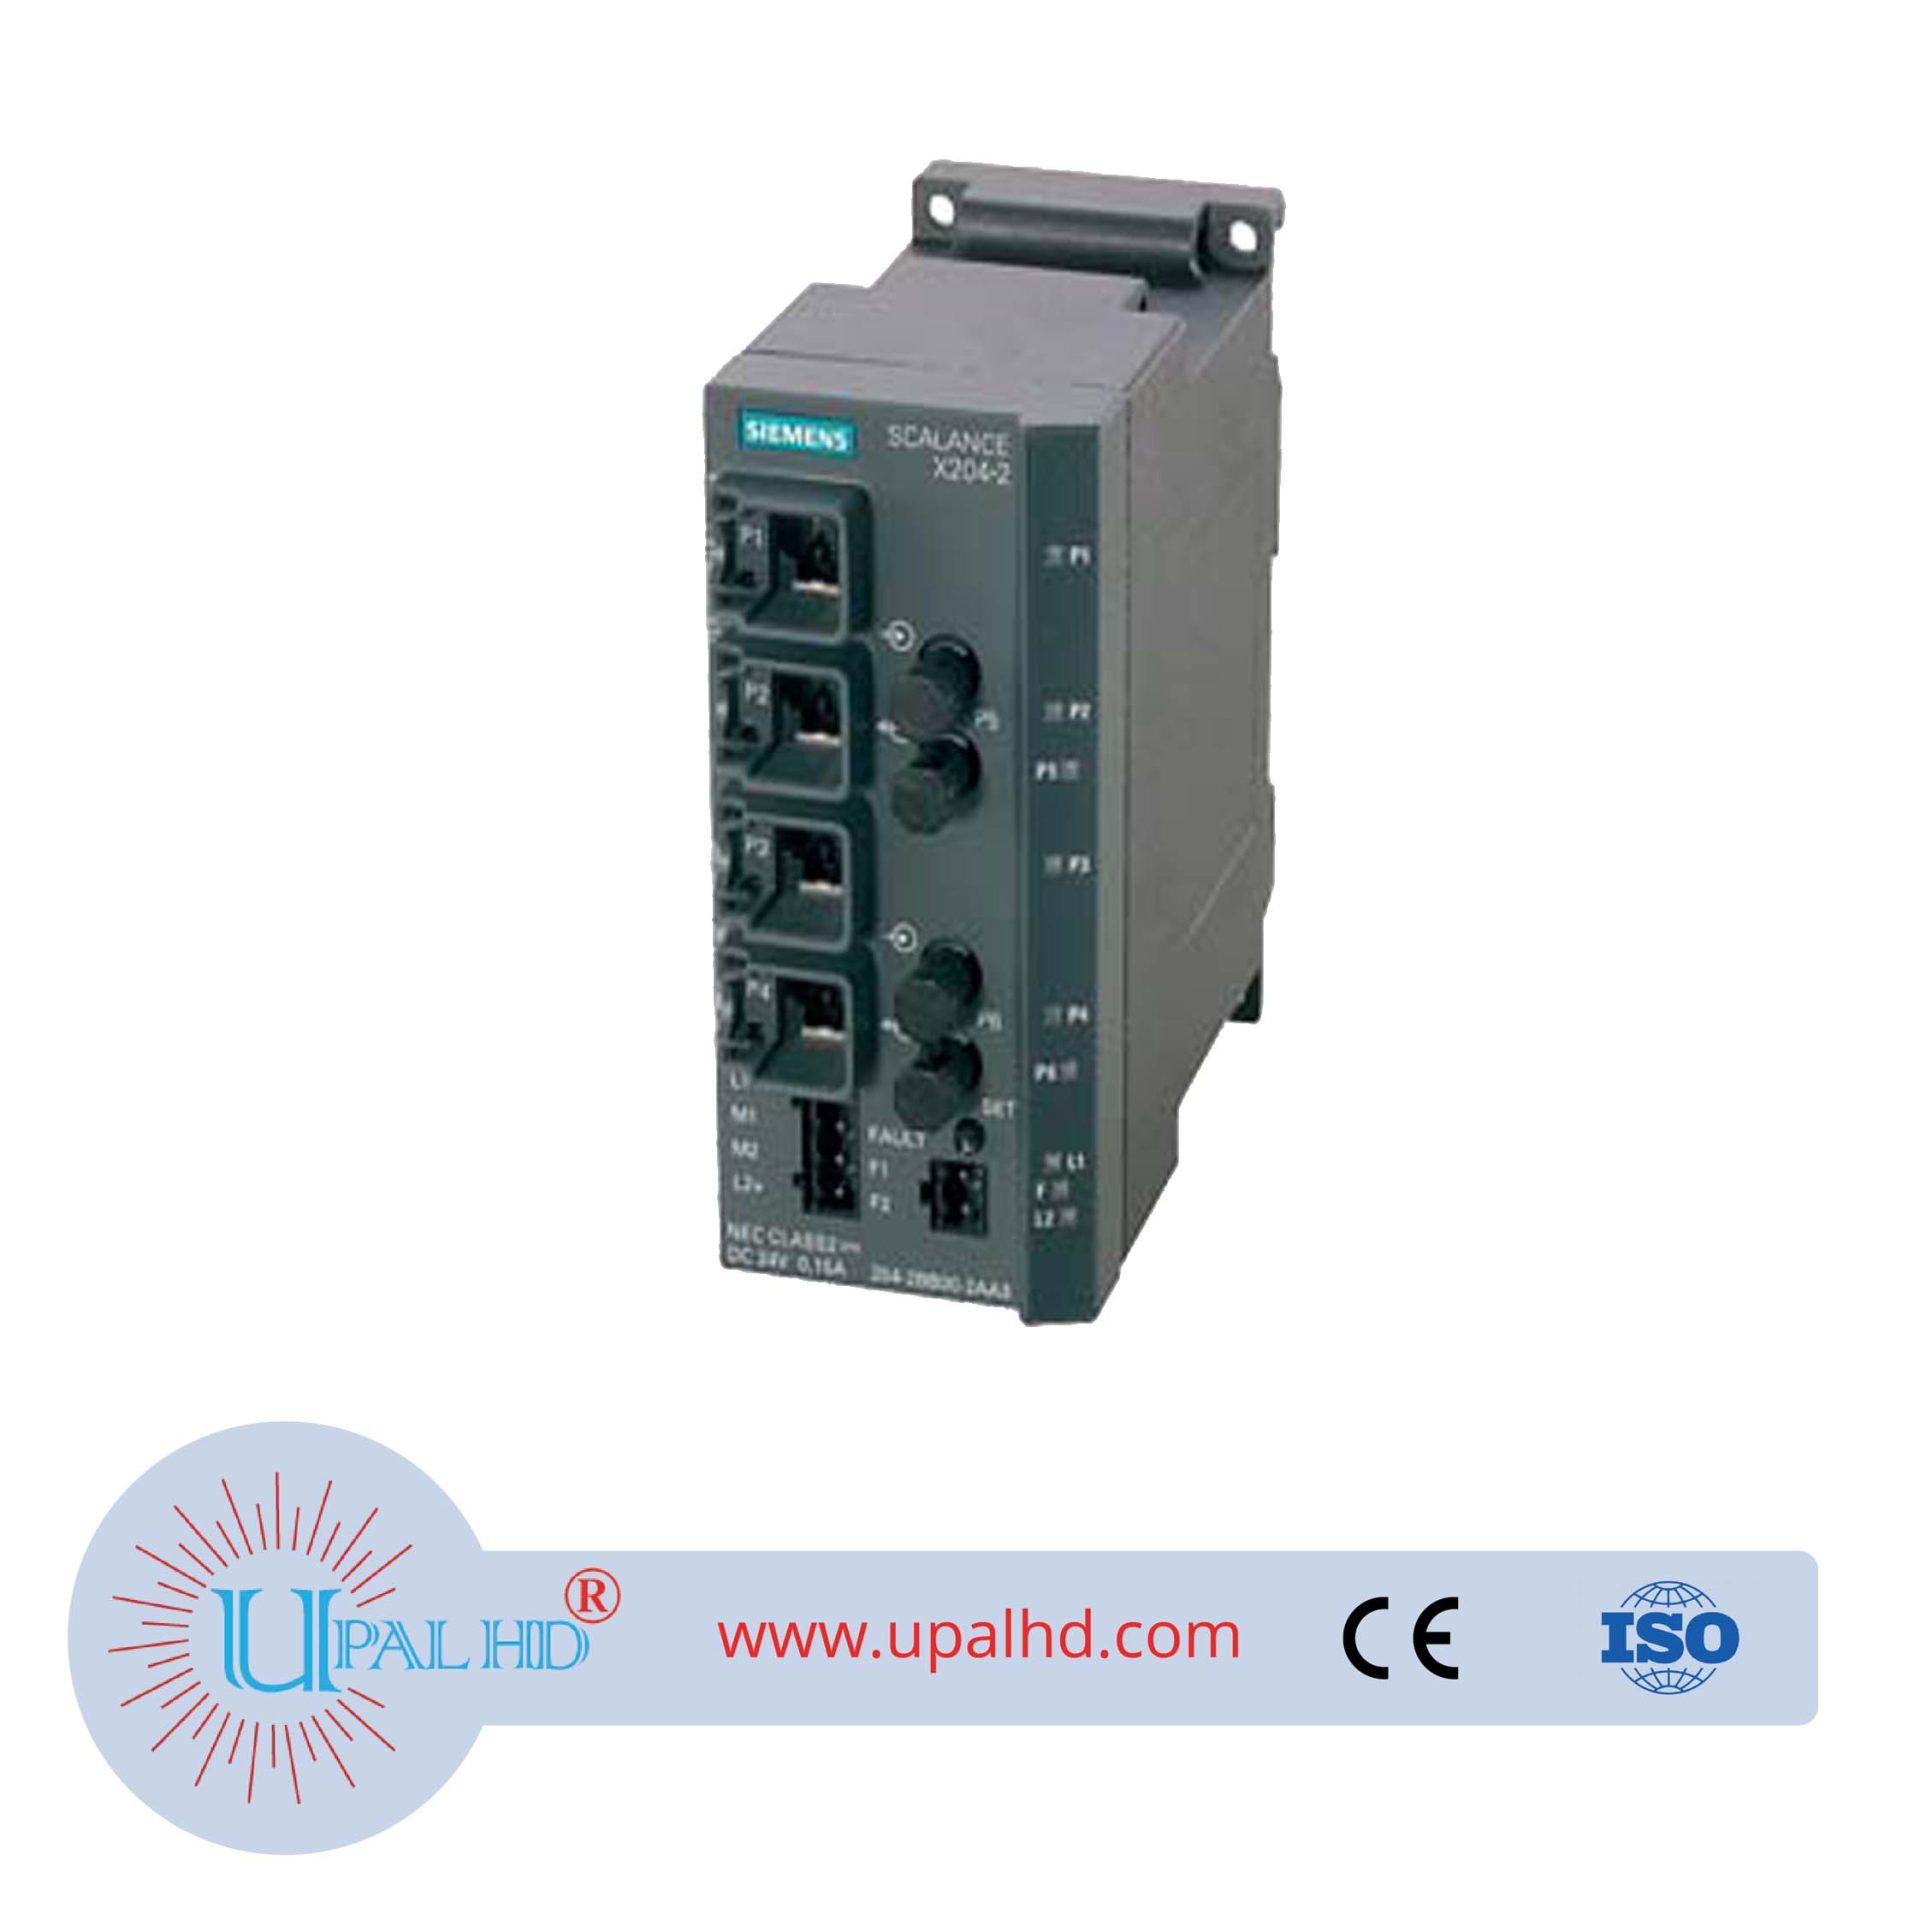 SCALANCE X204-2, managed IE switch, 4 x 10/100 Mbit/s RJ45 port, 2 x 100 Mbit/s multi-mode BFOC, LED diagnostics, error signaling contact with se